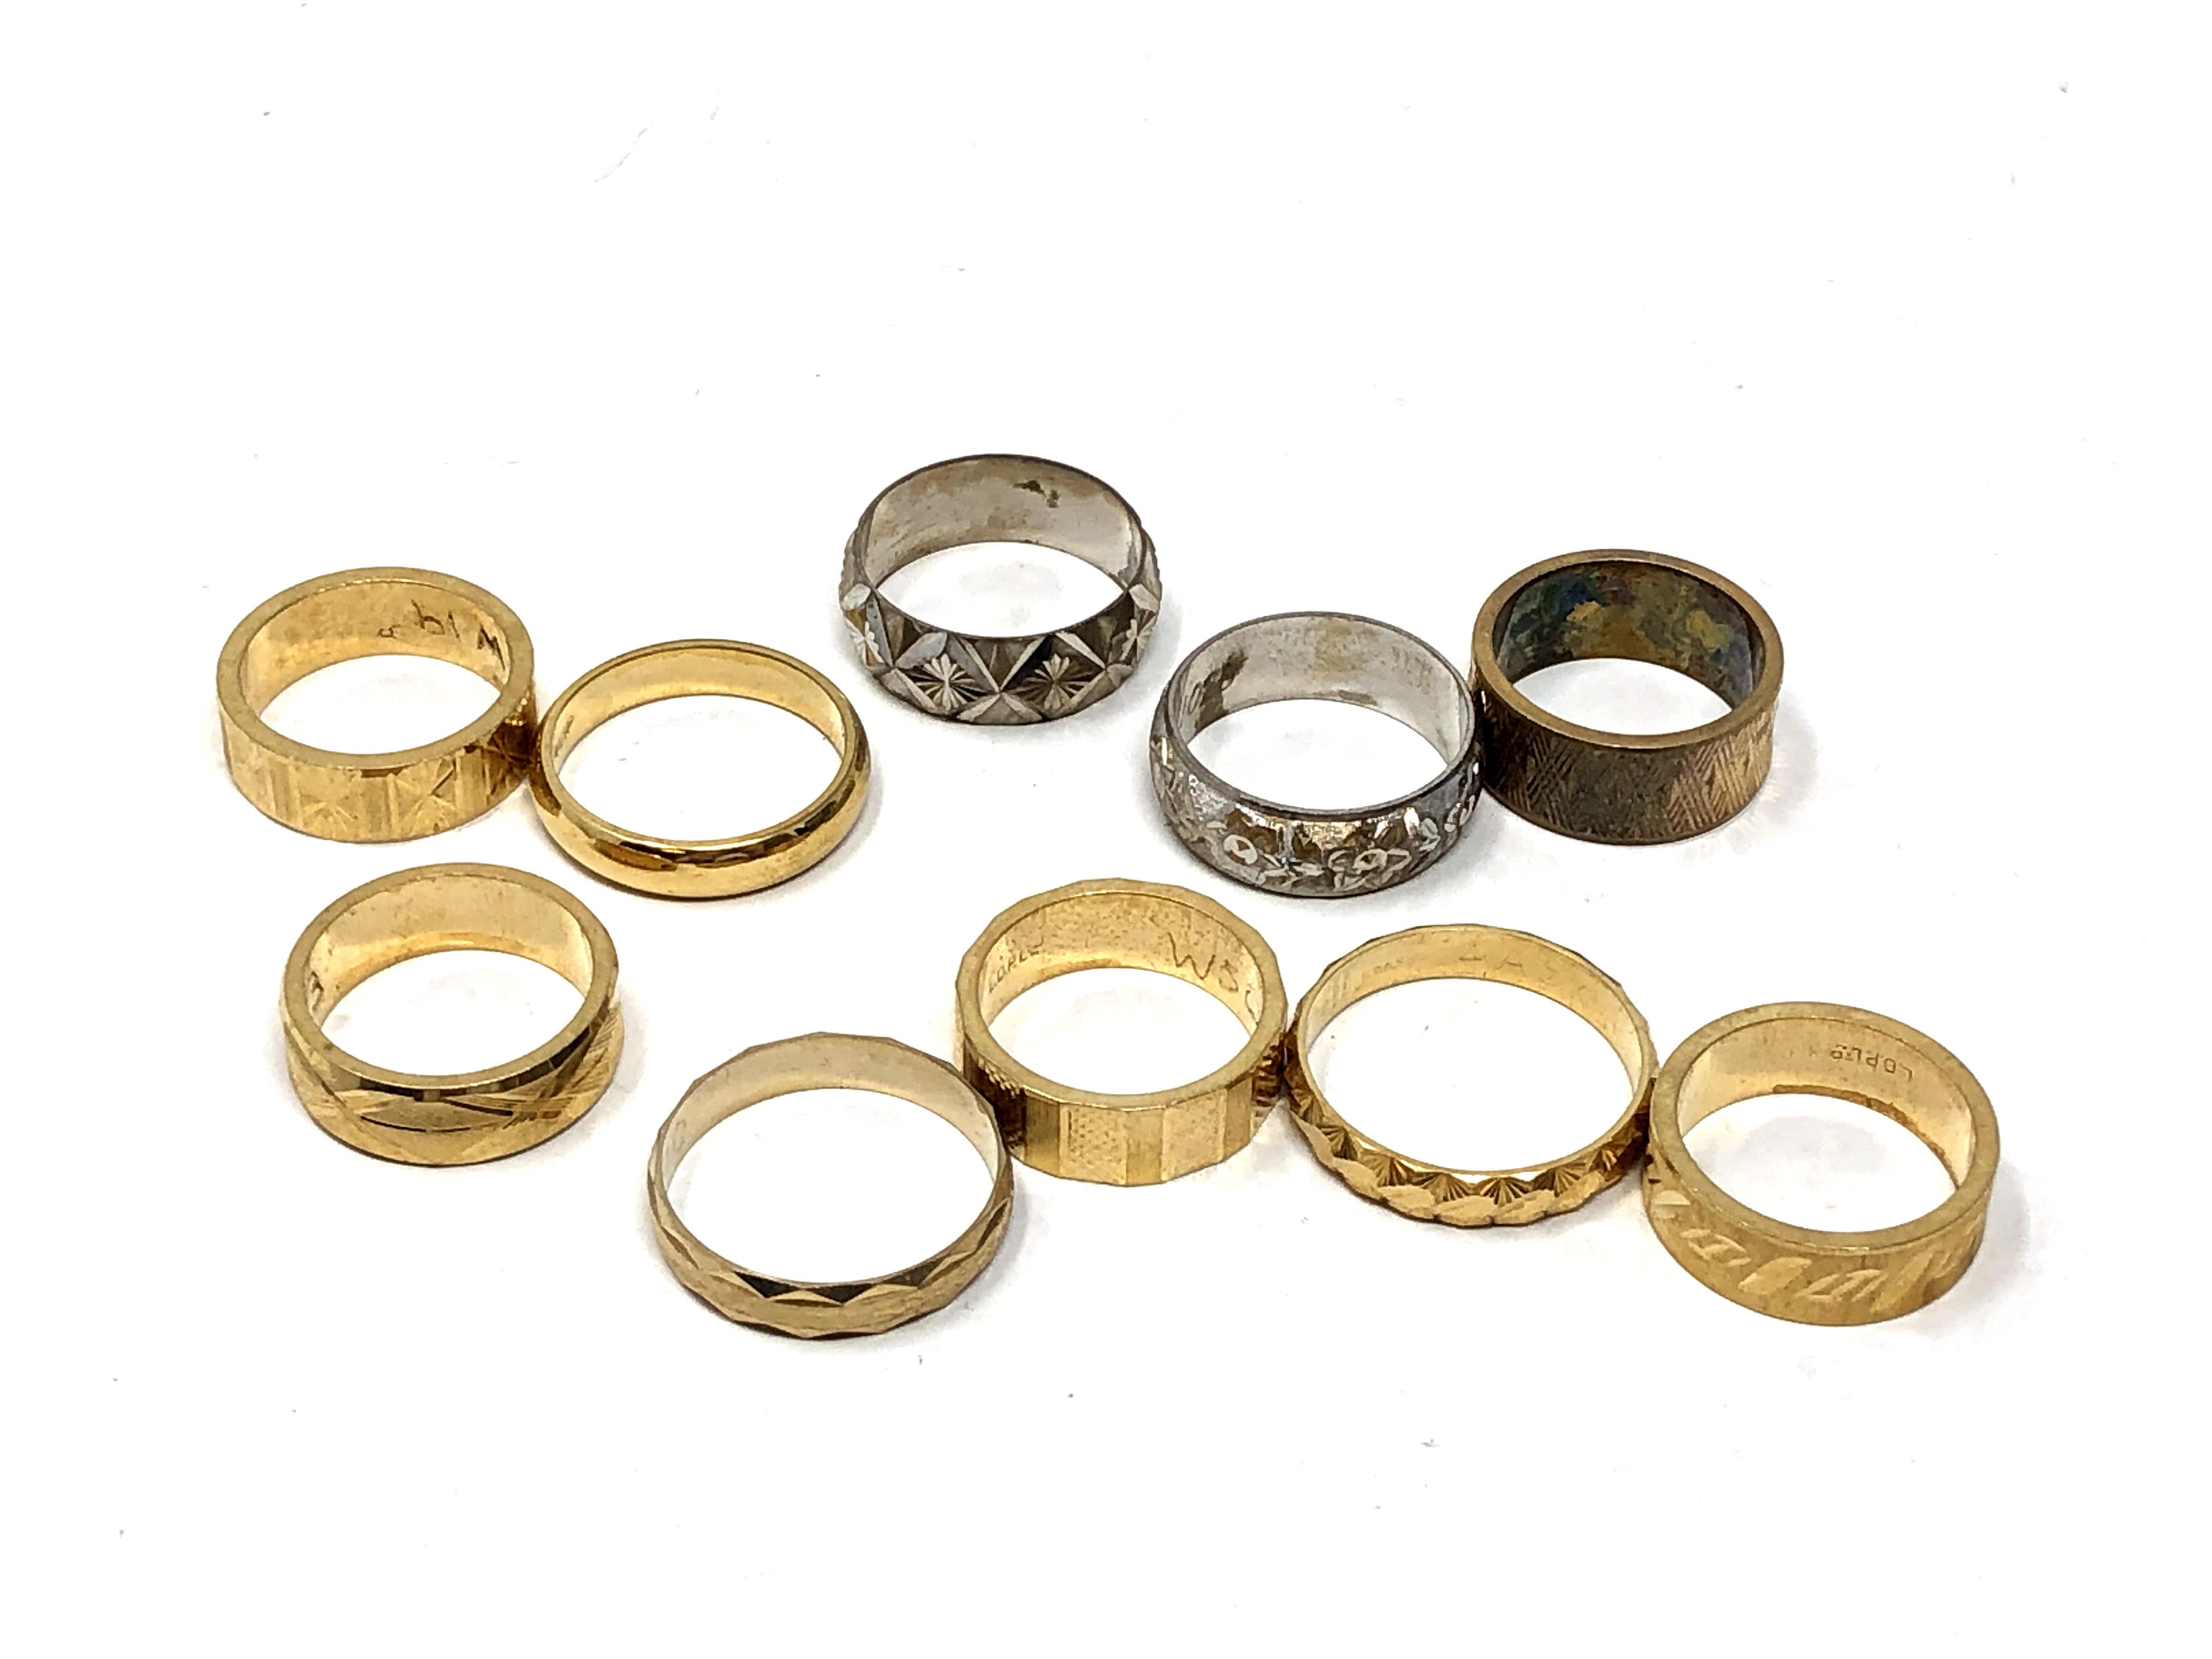 Ten dress rings